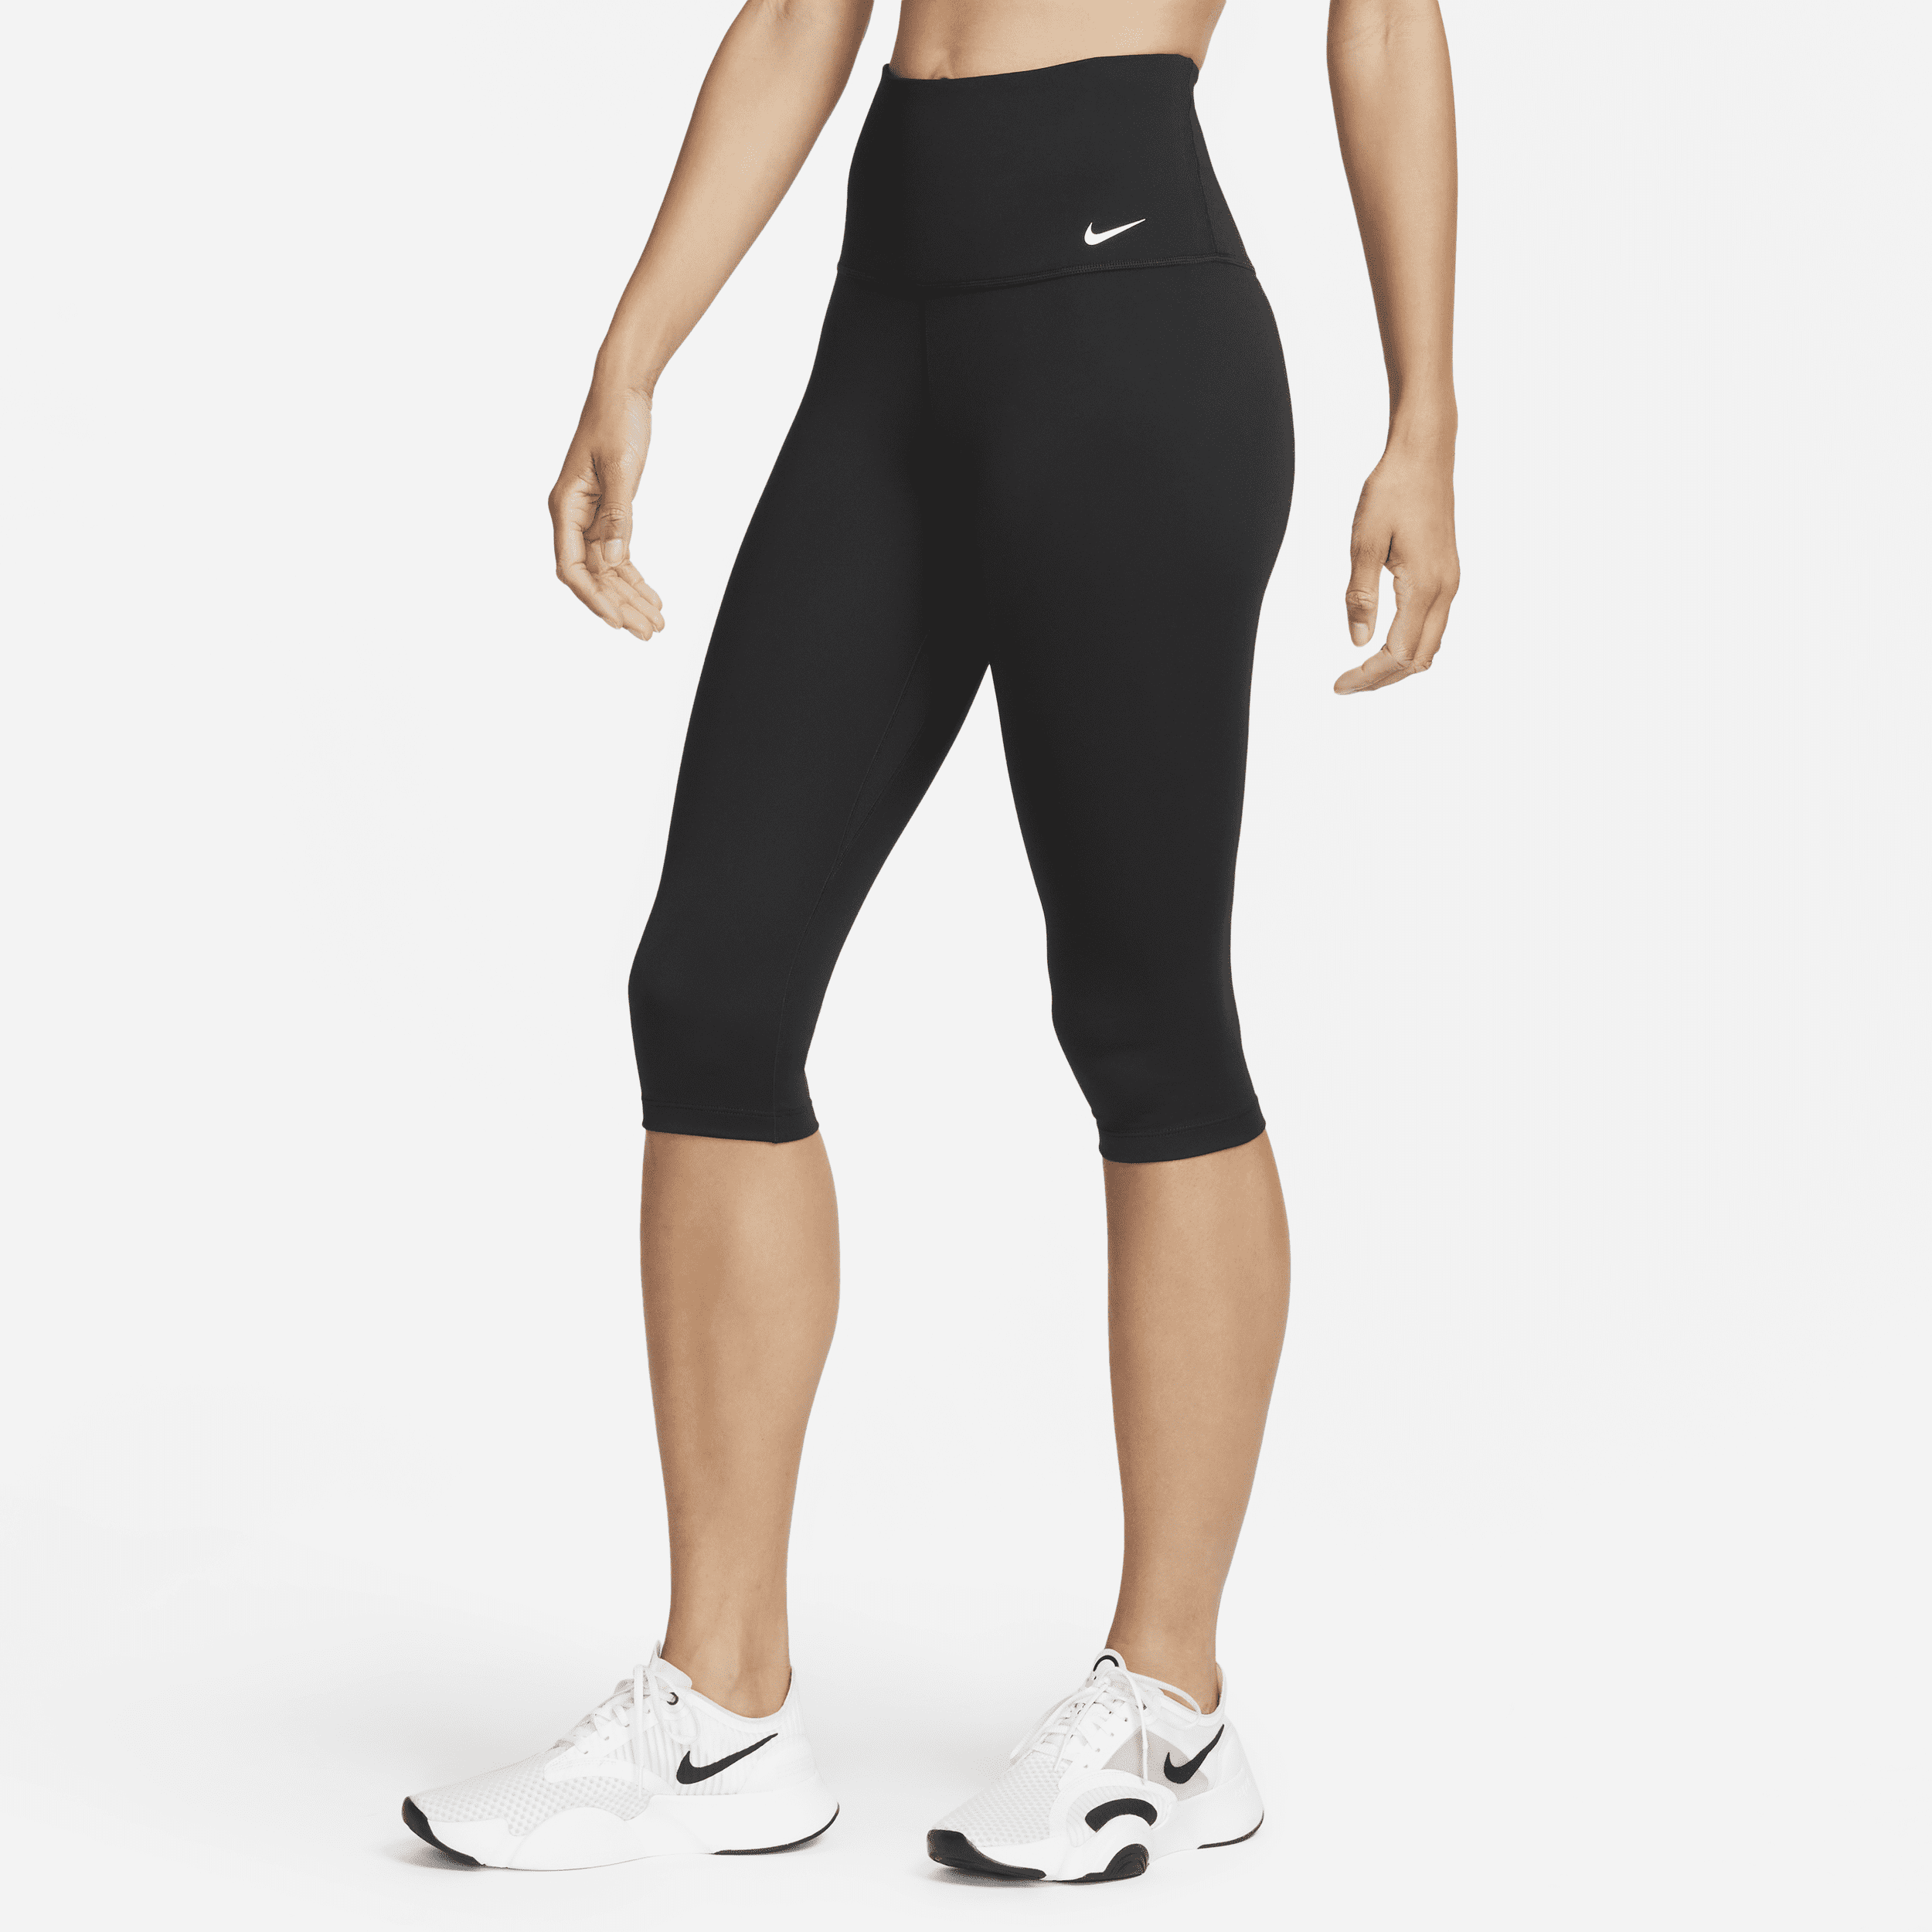 Højtaljet Nike One-caprileggings til kvinder - sort